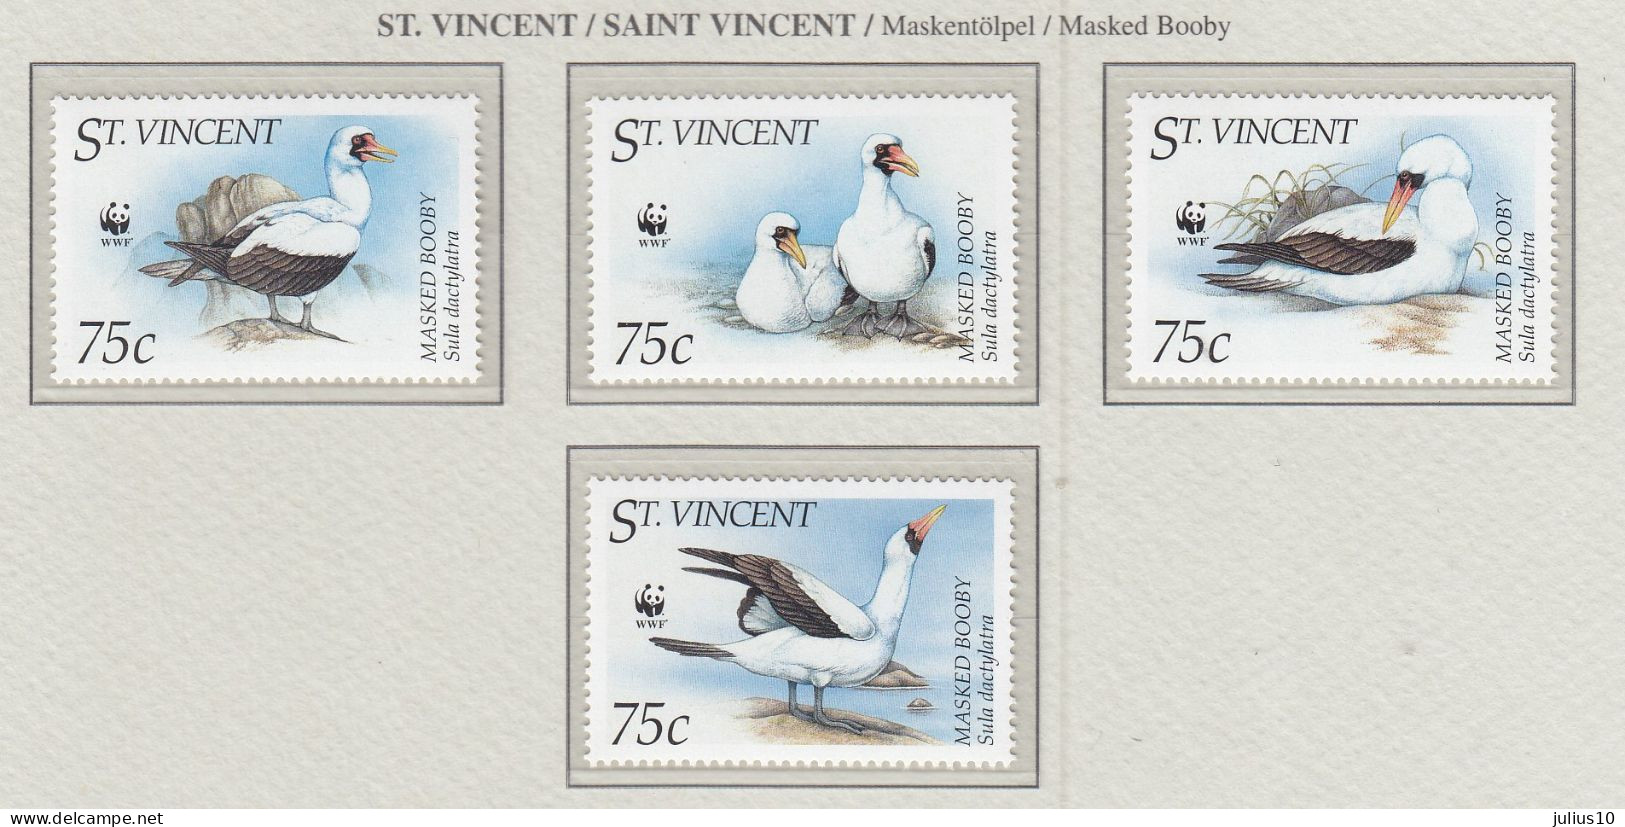 St. VINCENT 1995 WWF Masked Booby Birds Mi 3073 - 3076 MNH(**) Fauna 534 - Albatros & Stormvogels